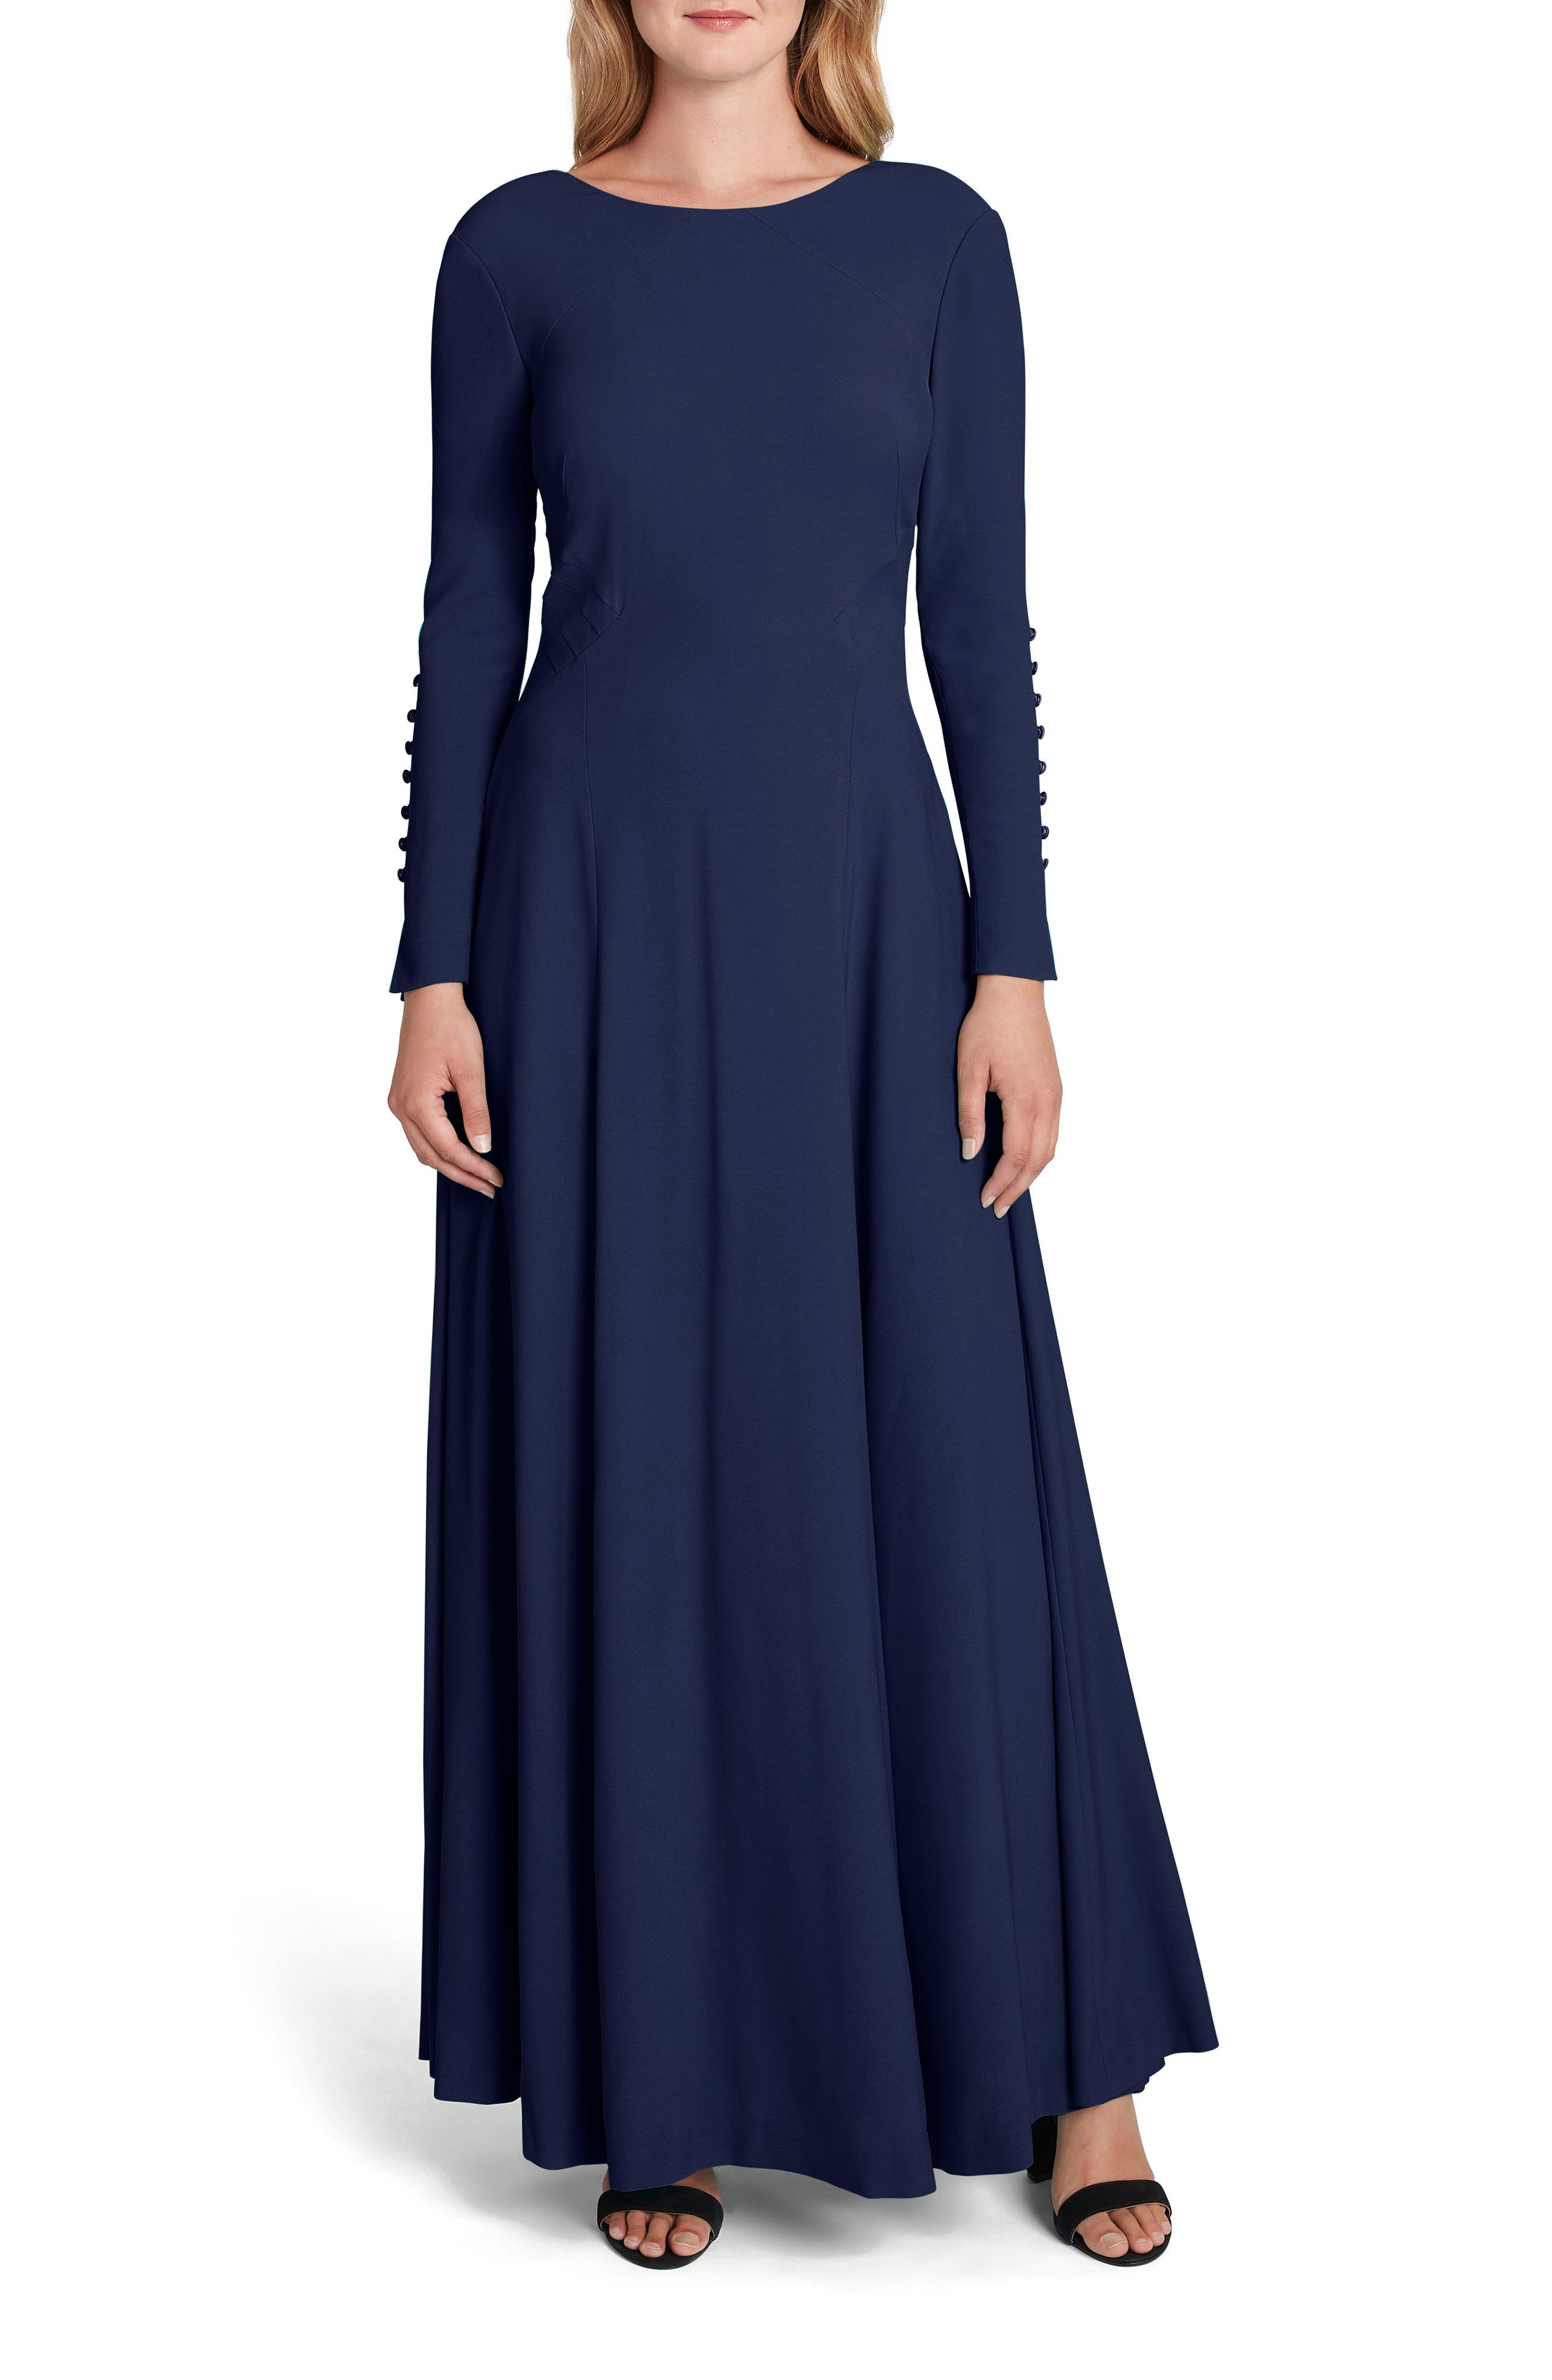 Tahari Formal Dresses ☀ Evening Gowns ...